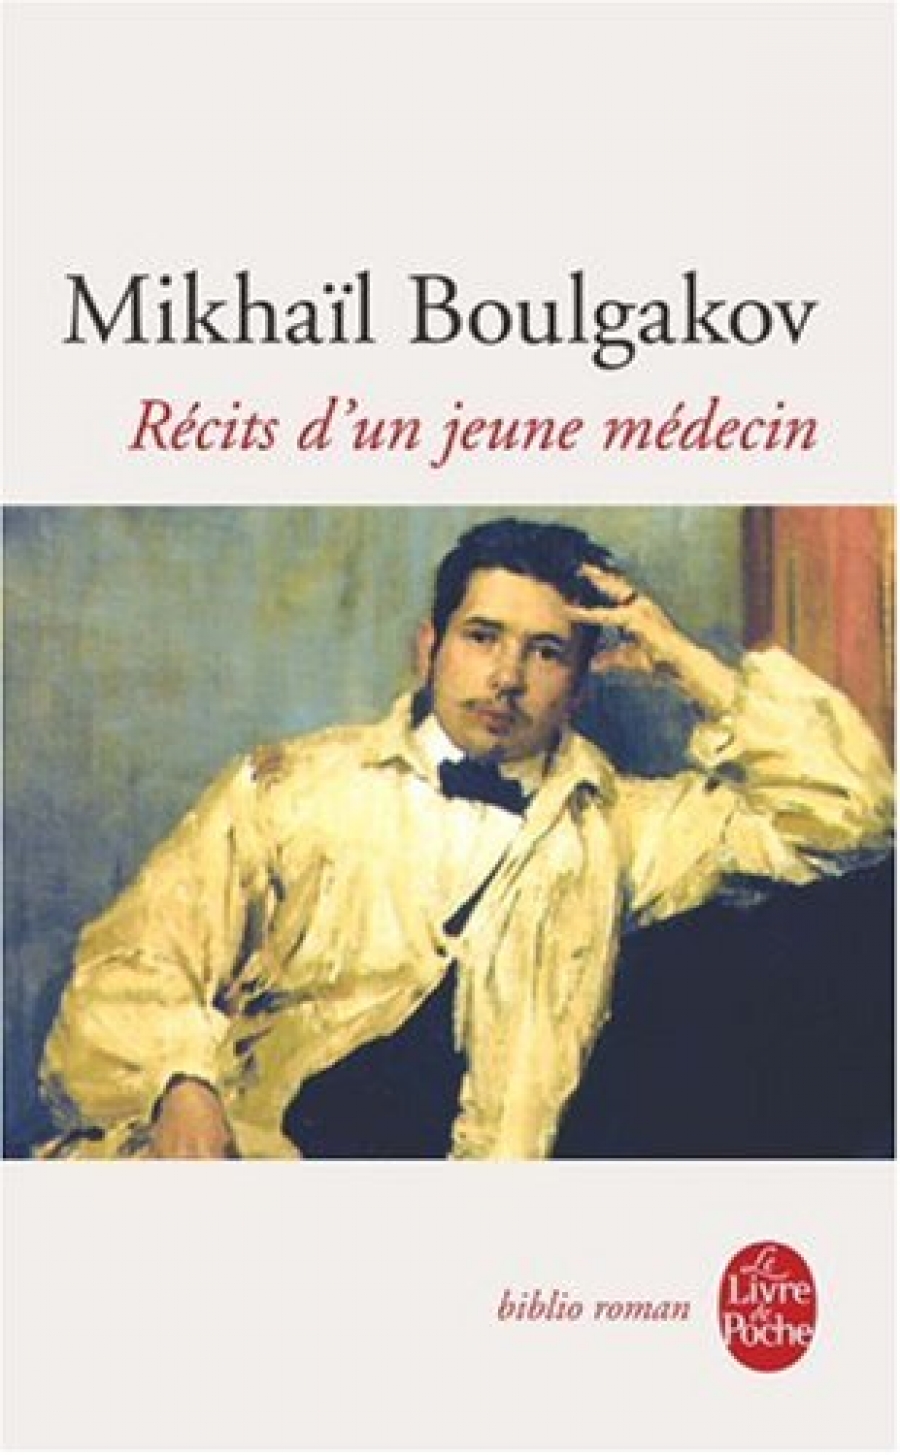 Mikhail B. Recits d'un Jeune Medecin 